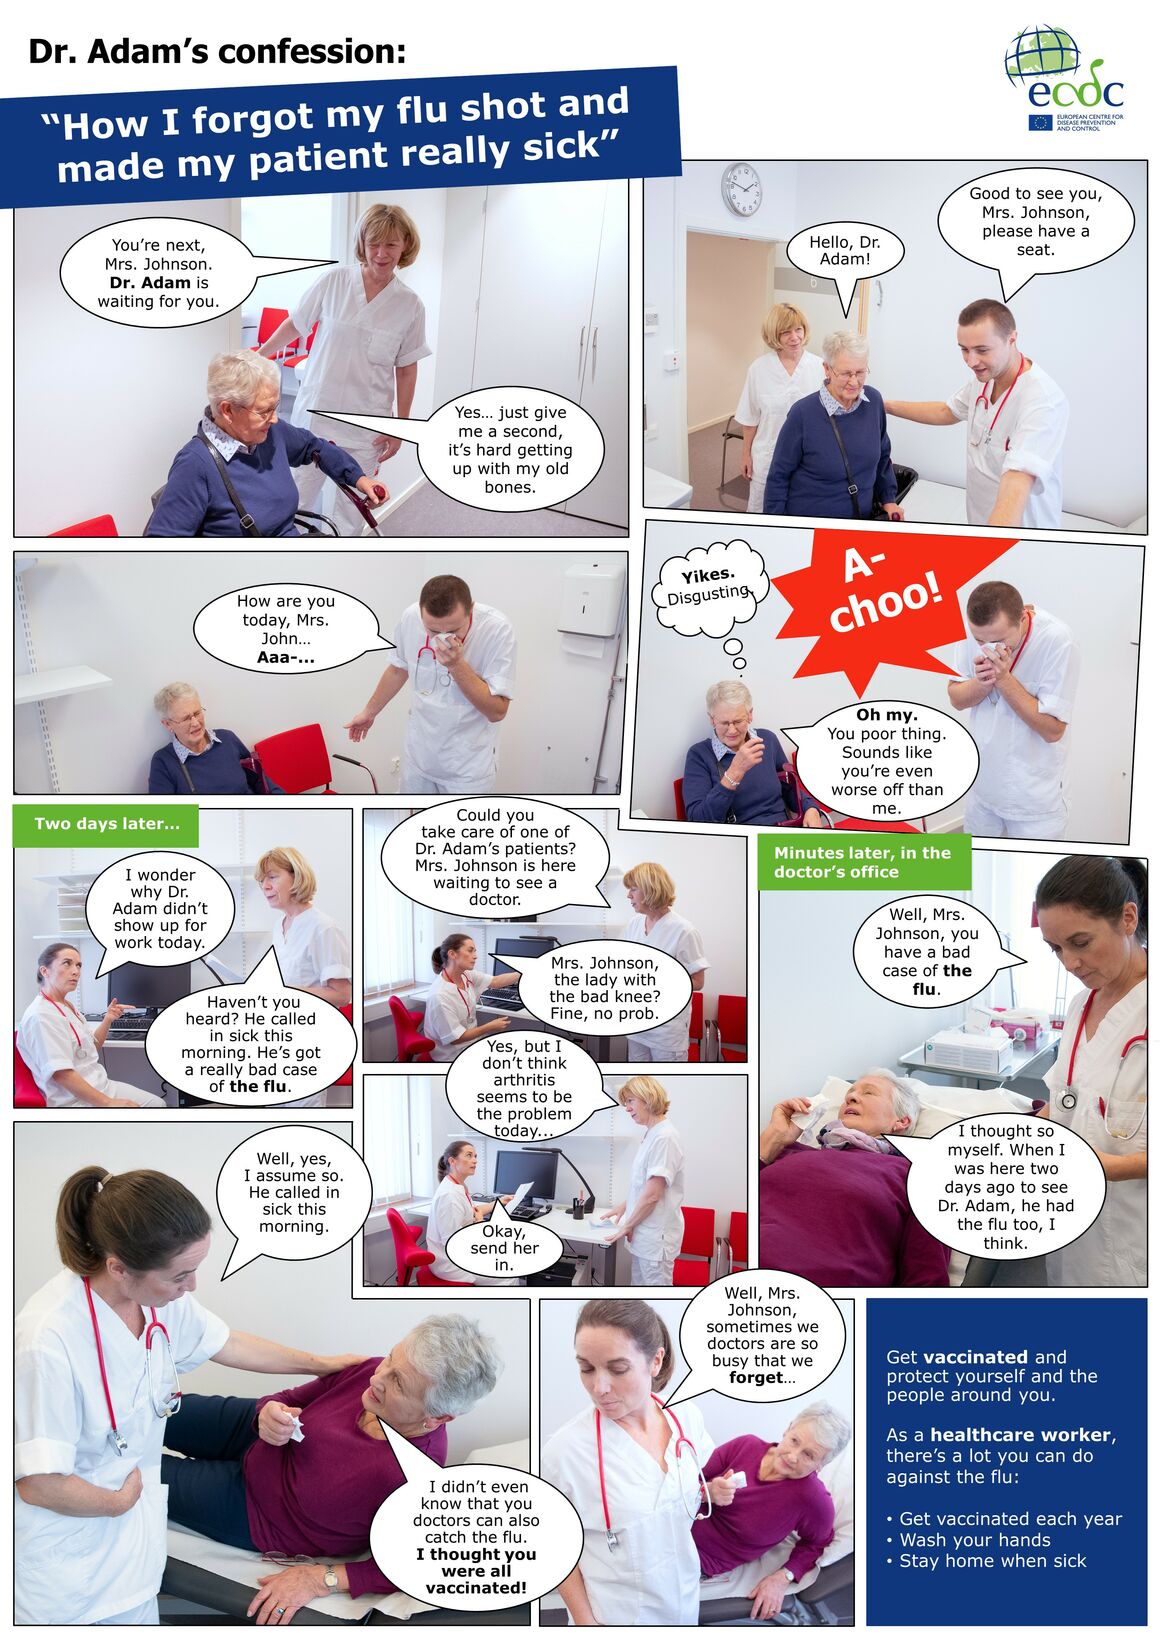 Photo comic poster seasonal influenza vaccination - Sick patient